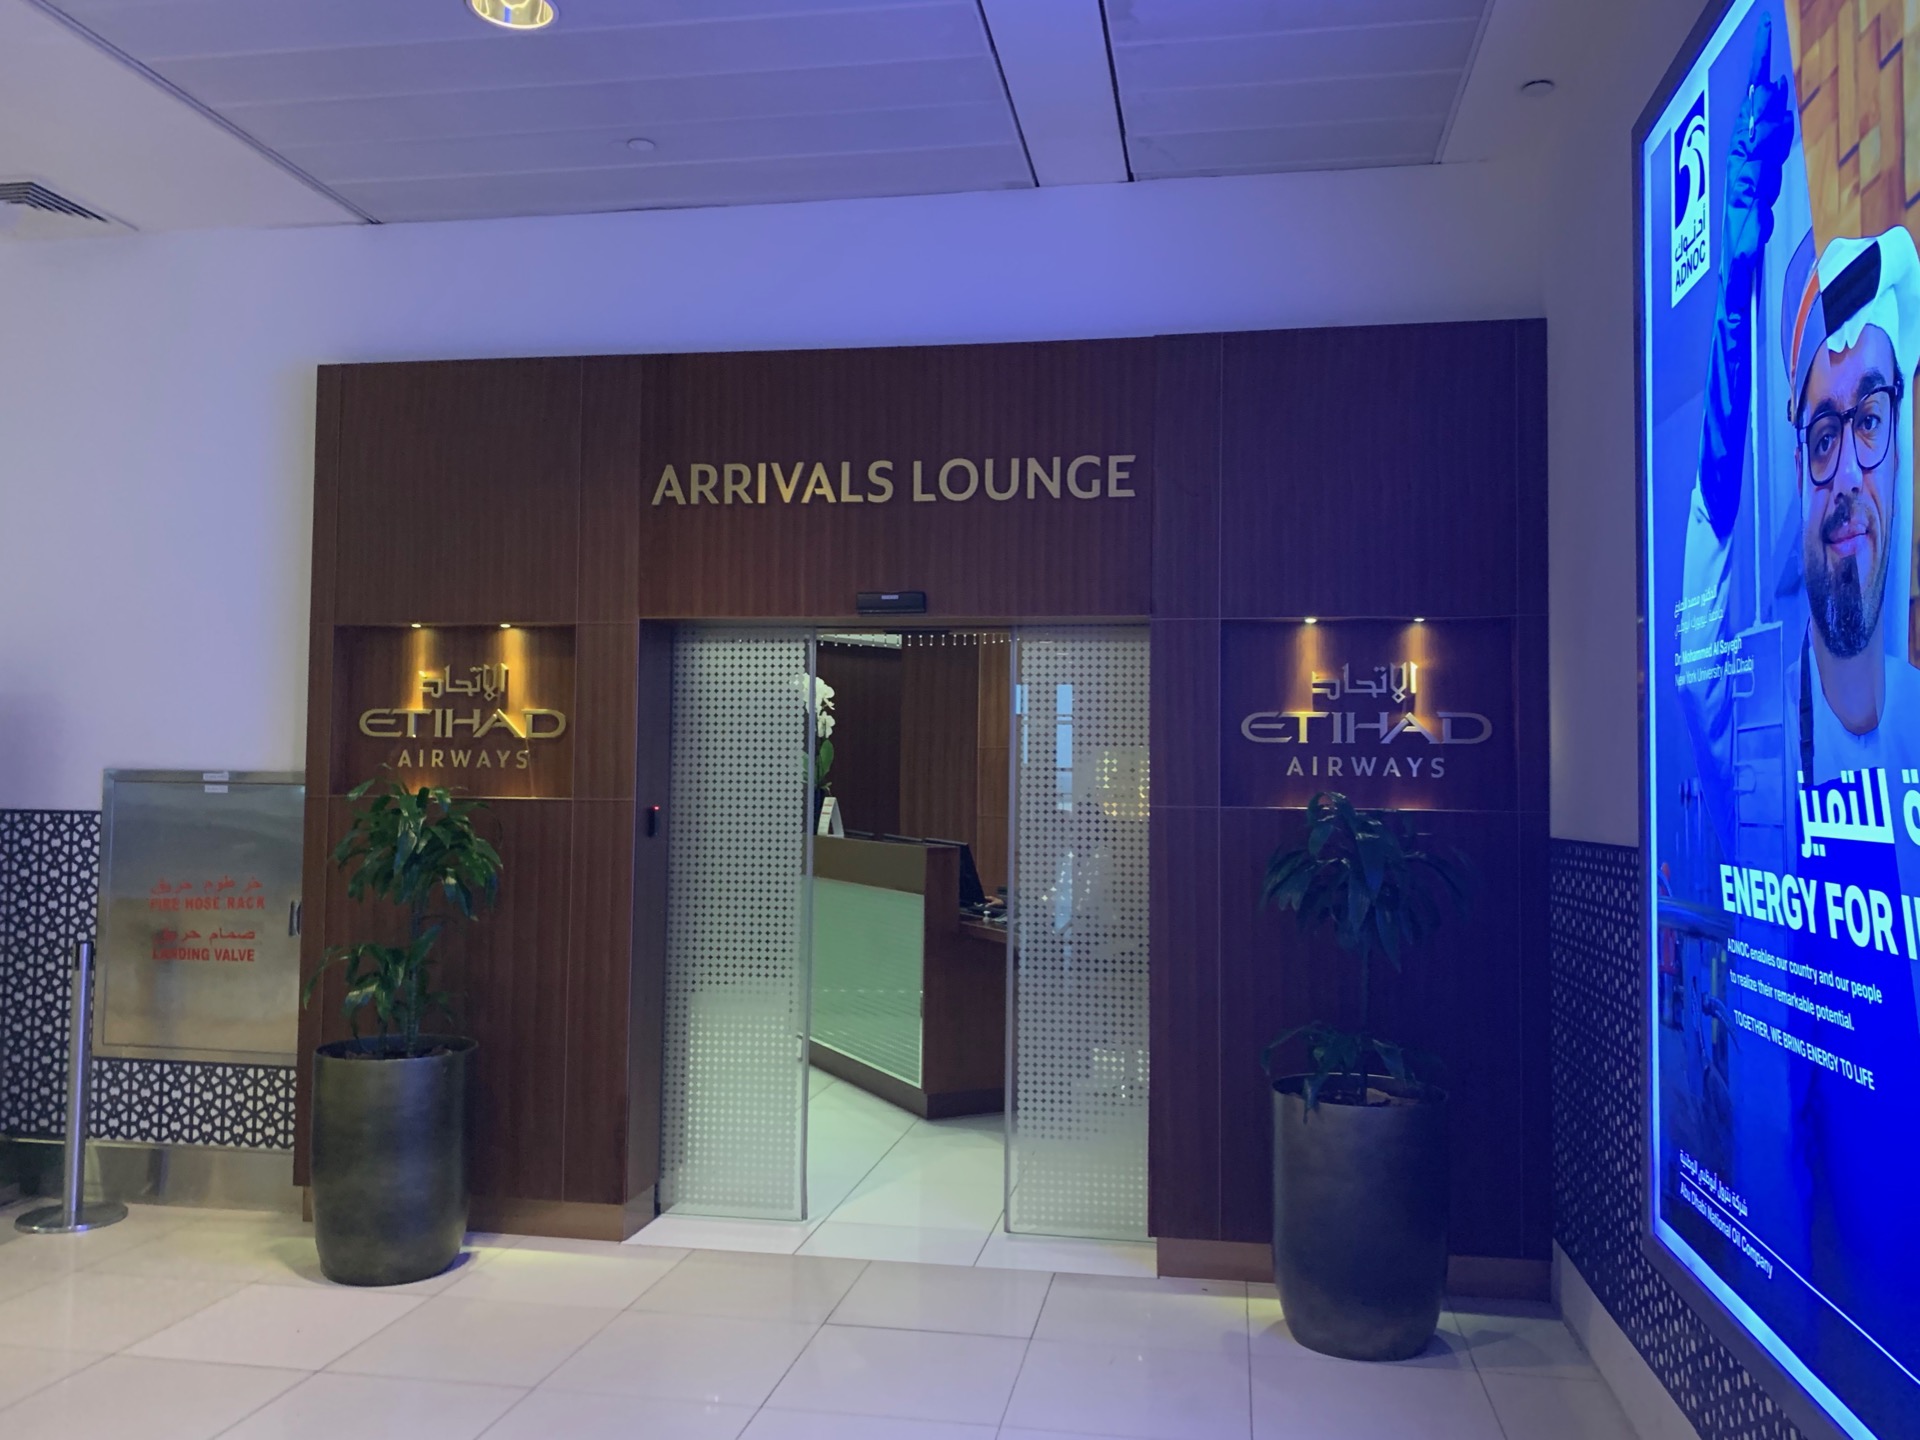 Arrivals Lounge